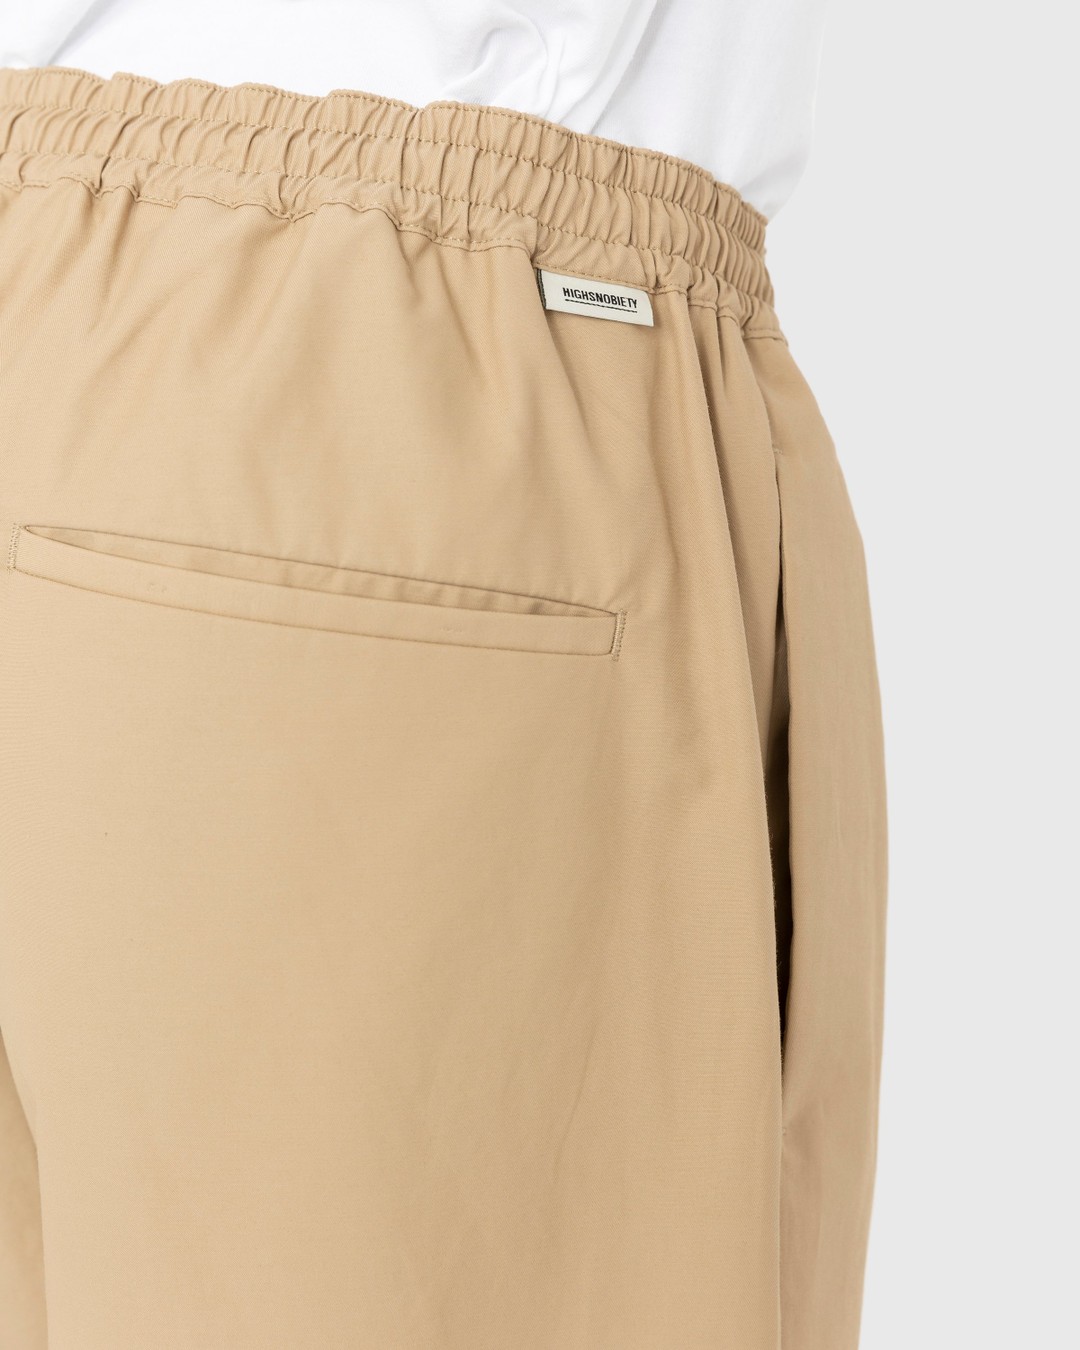 Highsnobiety – Cotton Nylon Elastic Pants Beige - Trousers - Beige - Image 5